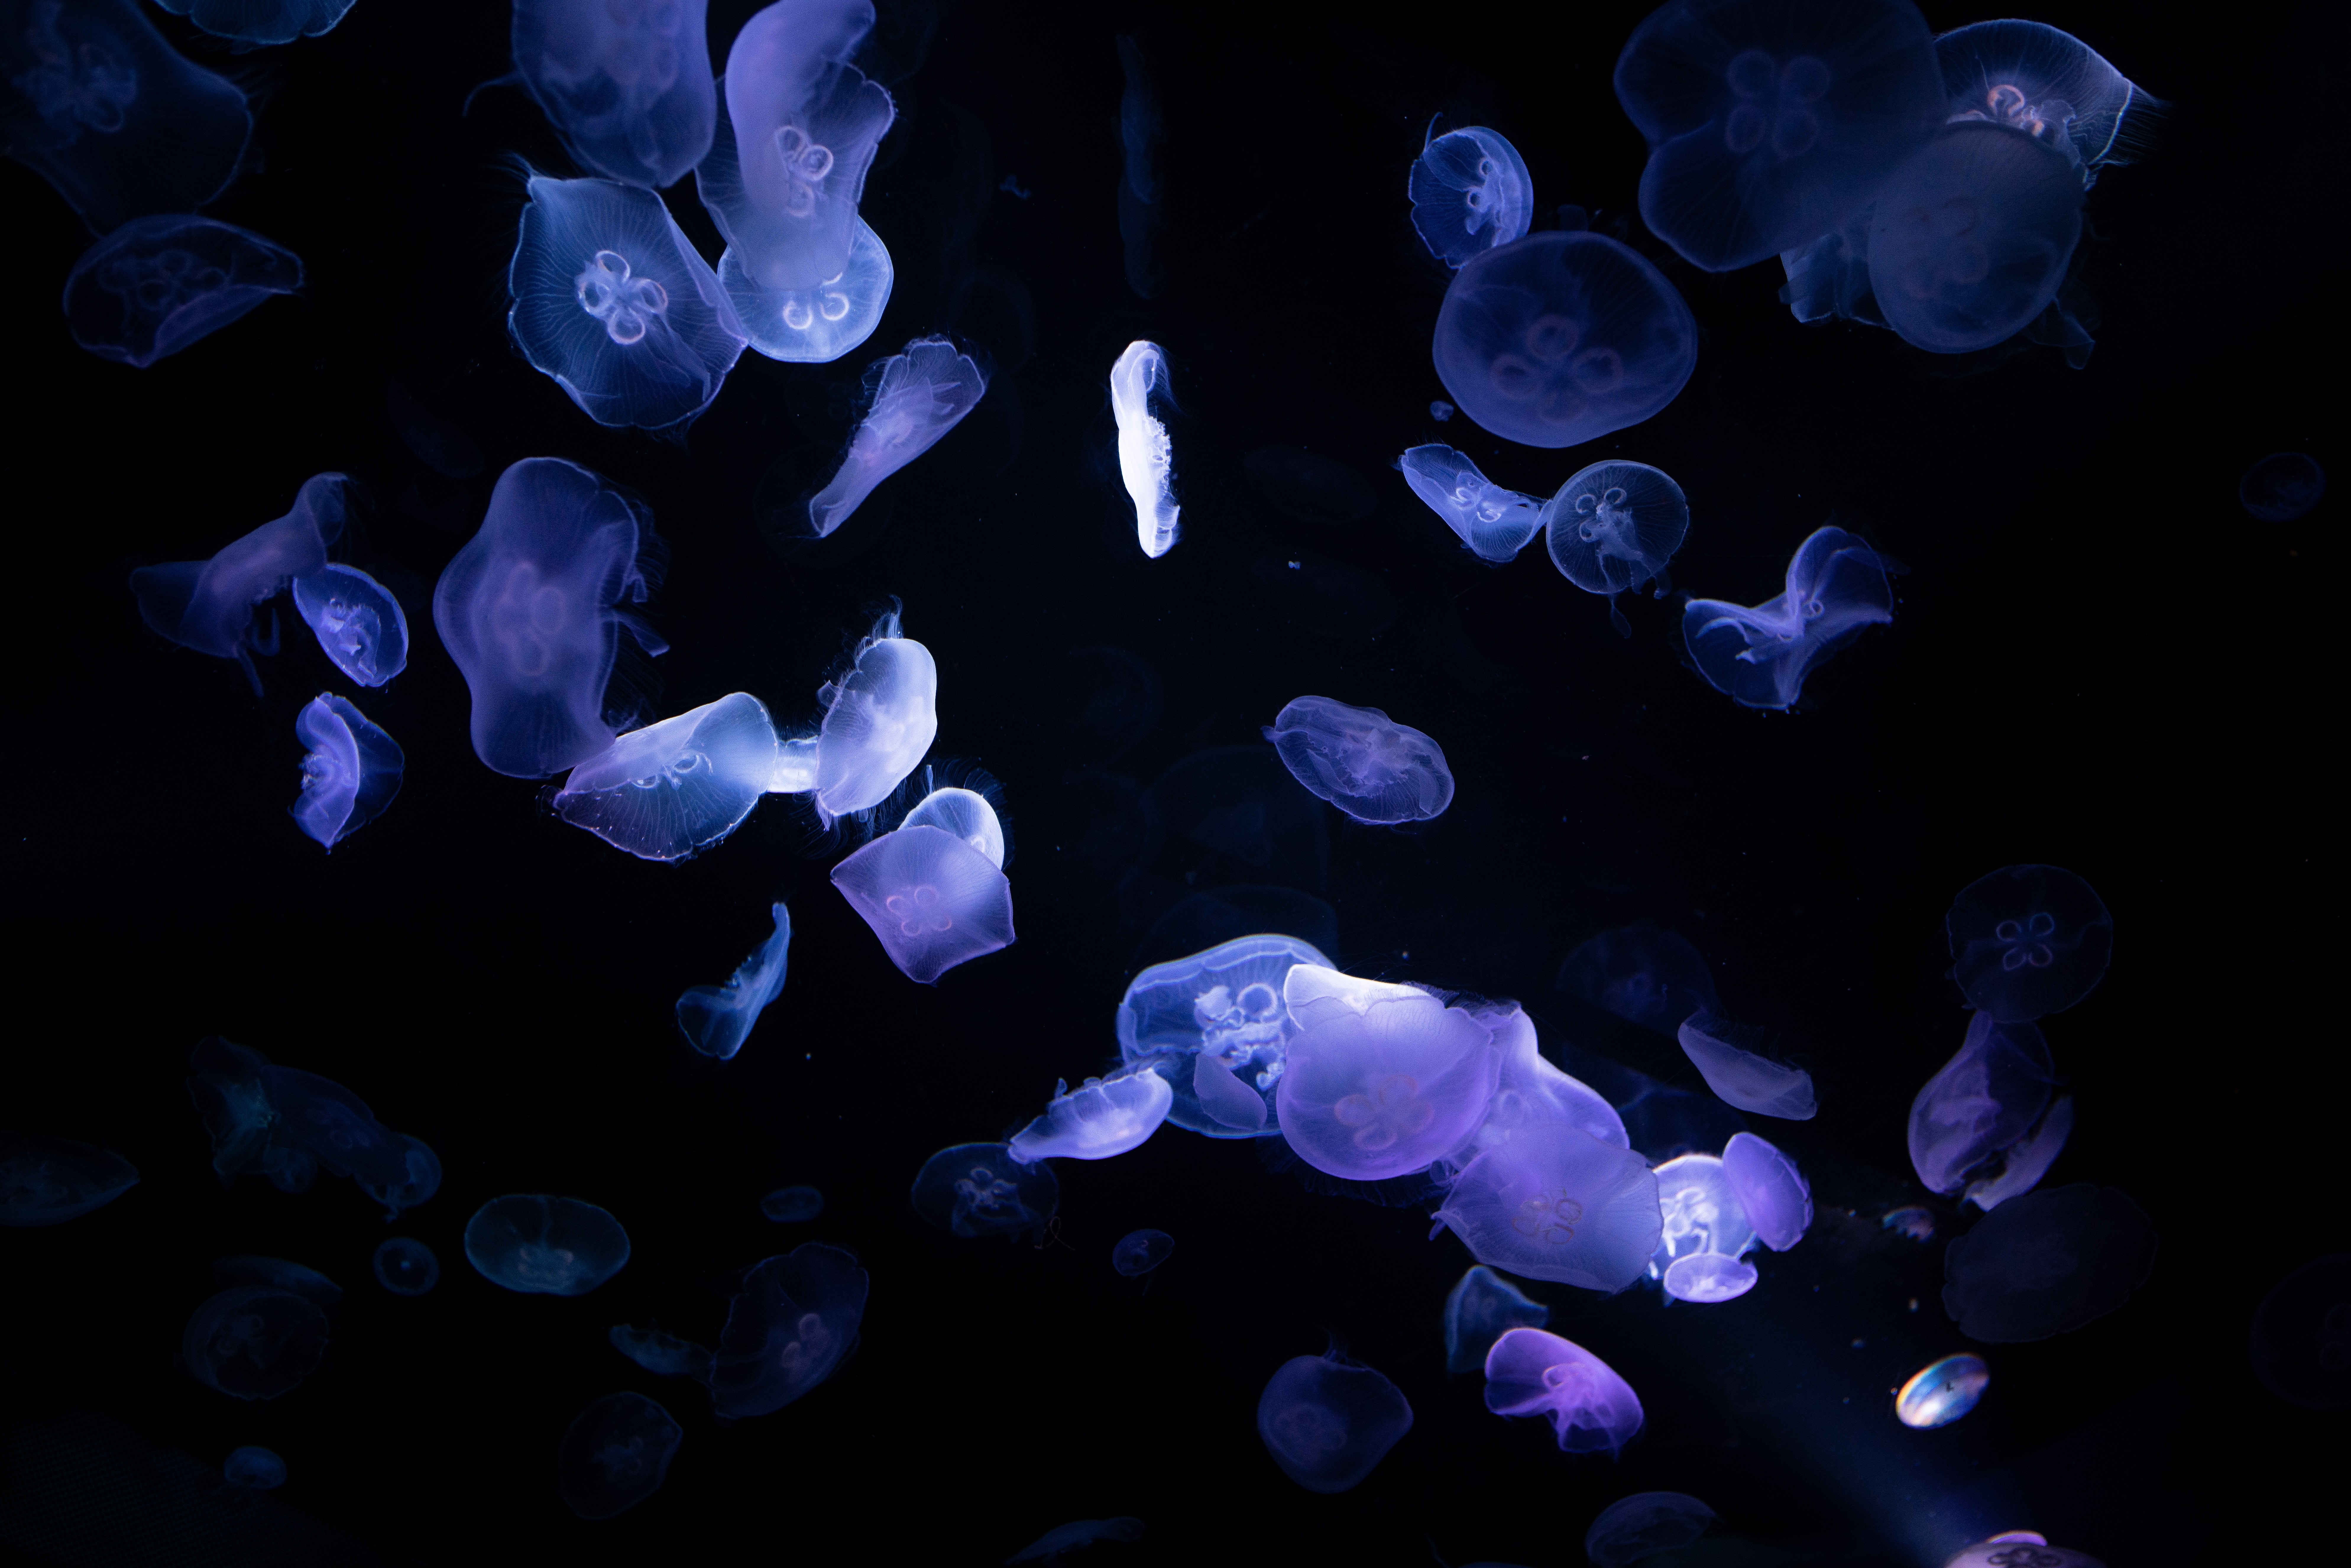 HD wallpaper, 8K, Deep Ocean, Jellyfishes, Bioluminescence, Dark, Black Background, 5K, Underwater